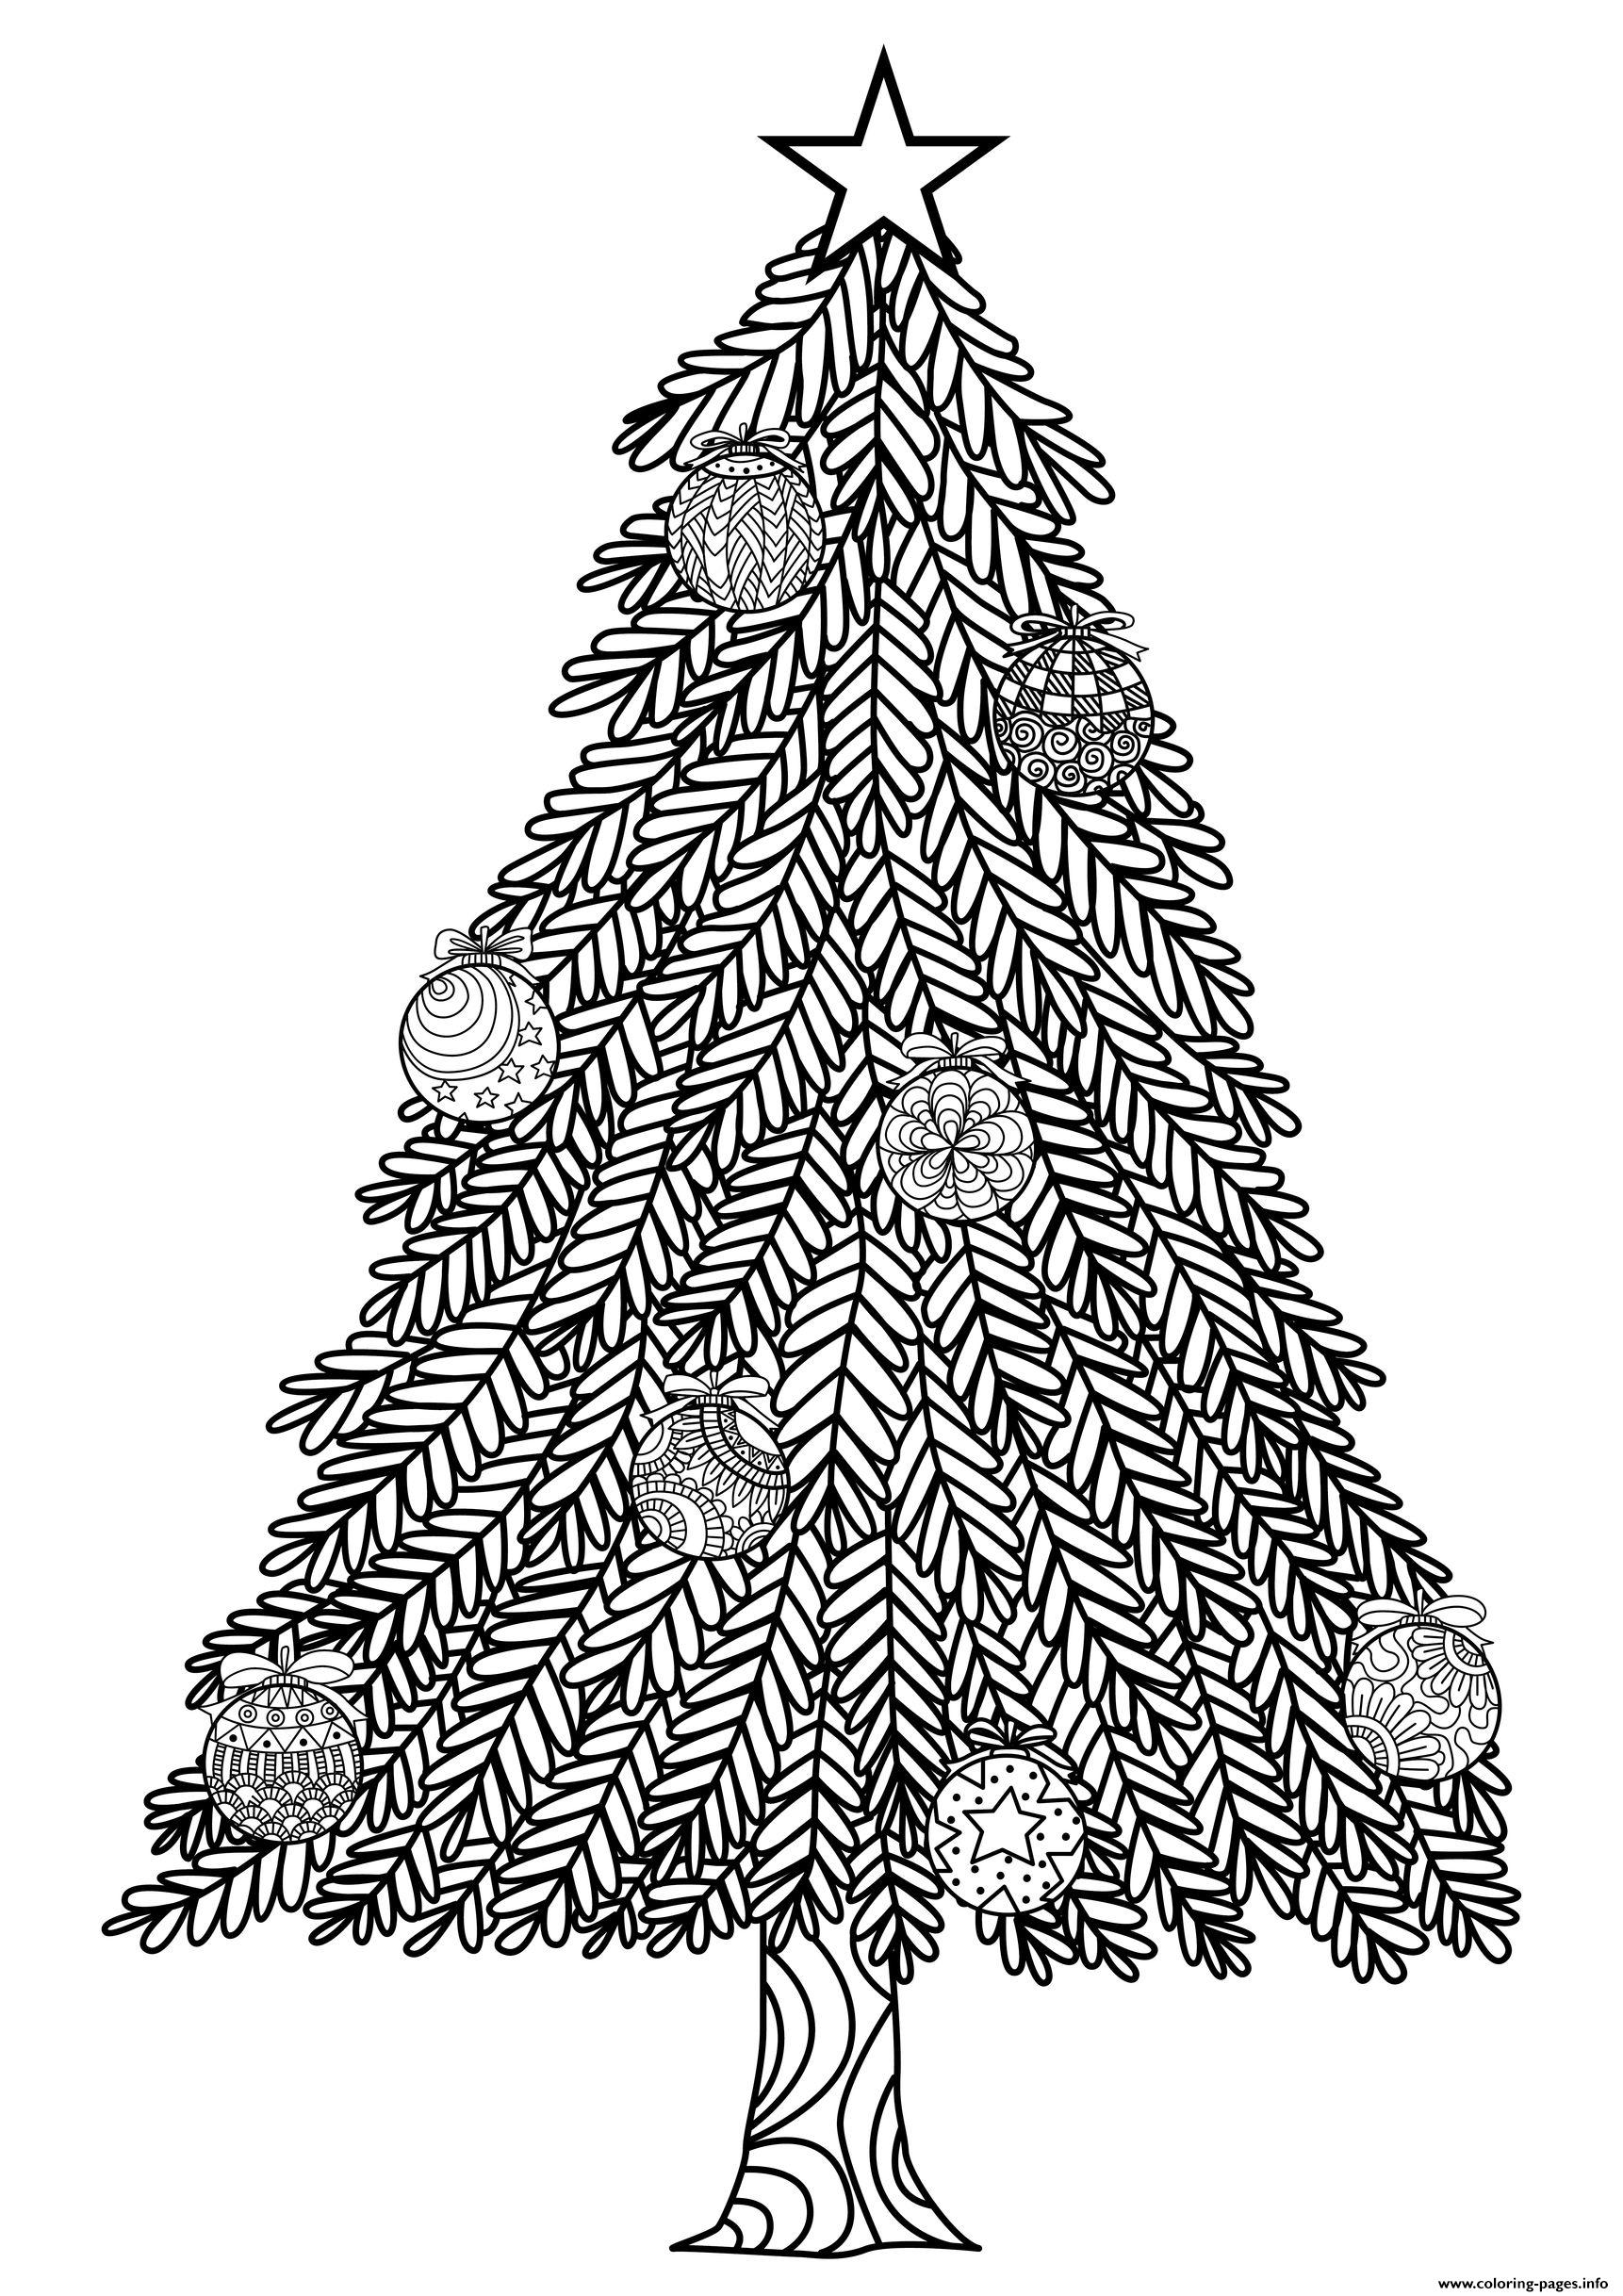 Adult Christmas Tree With Ball Ornaments By Bimdeedee ...